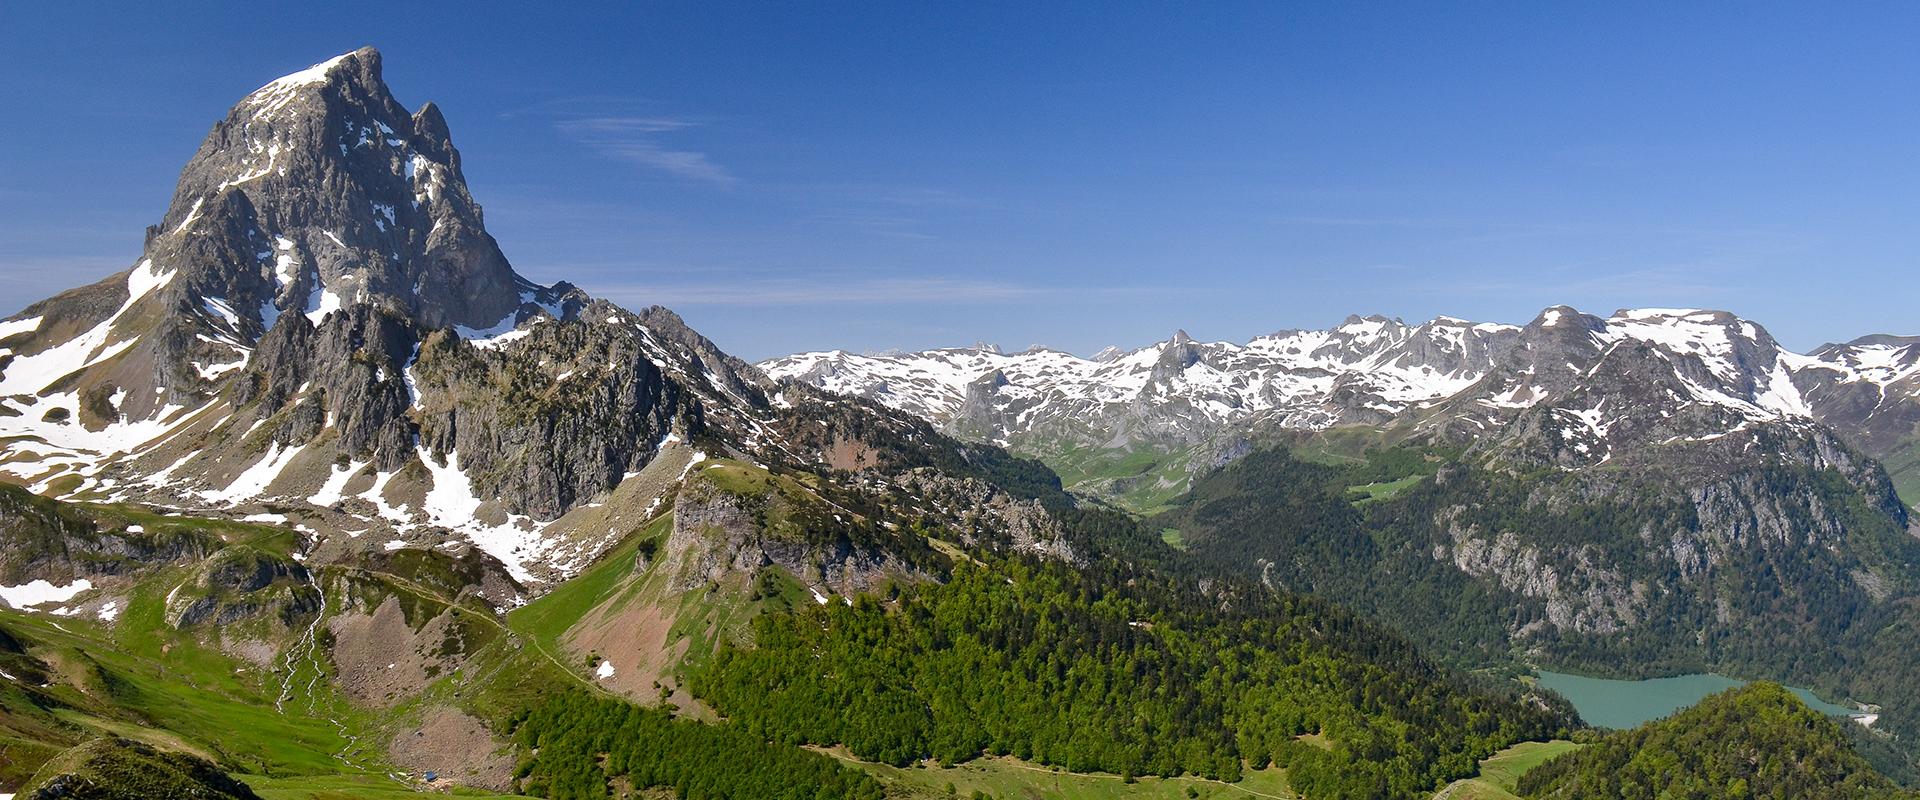  The Pic du Midi d'Ossau, Pyrenees